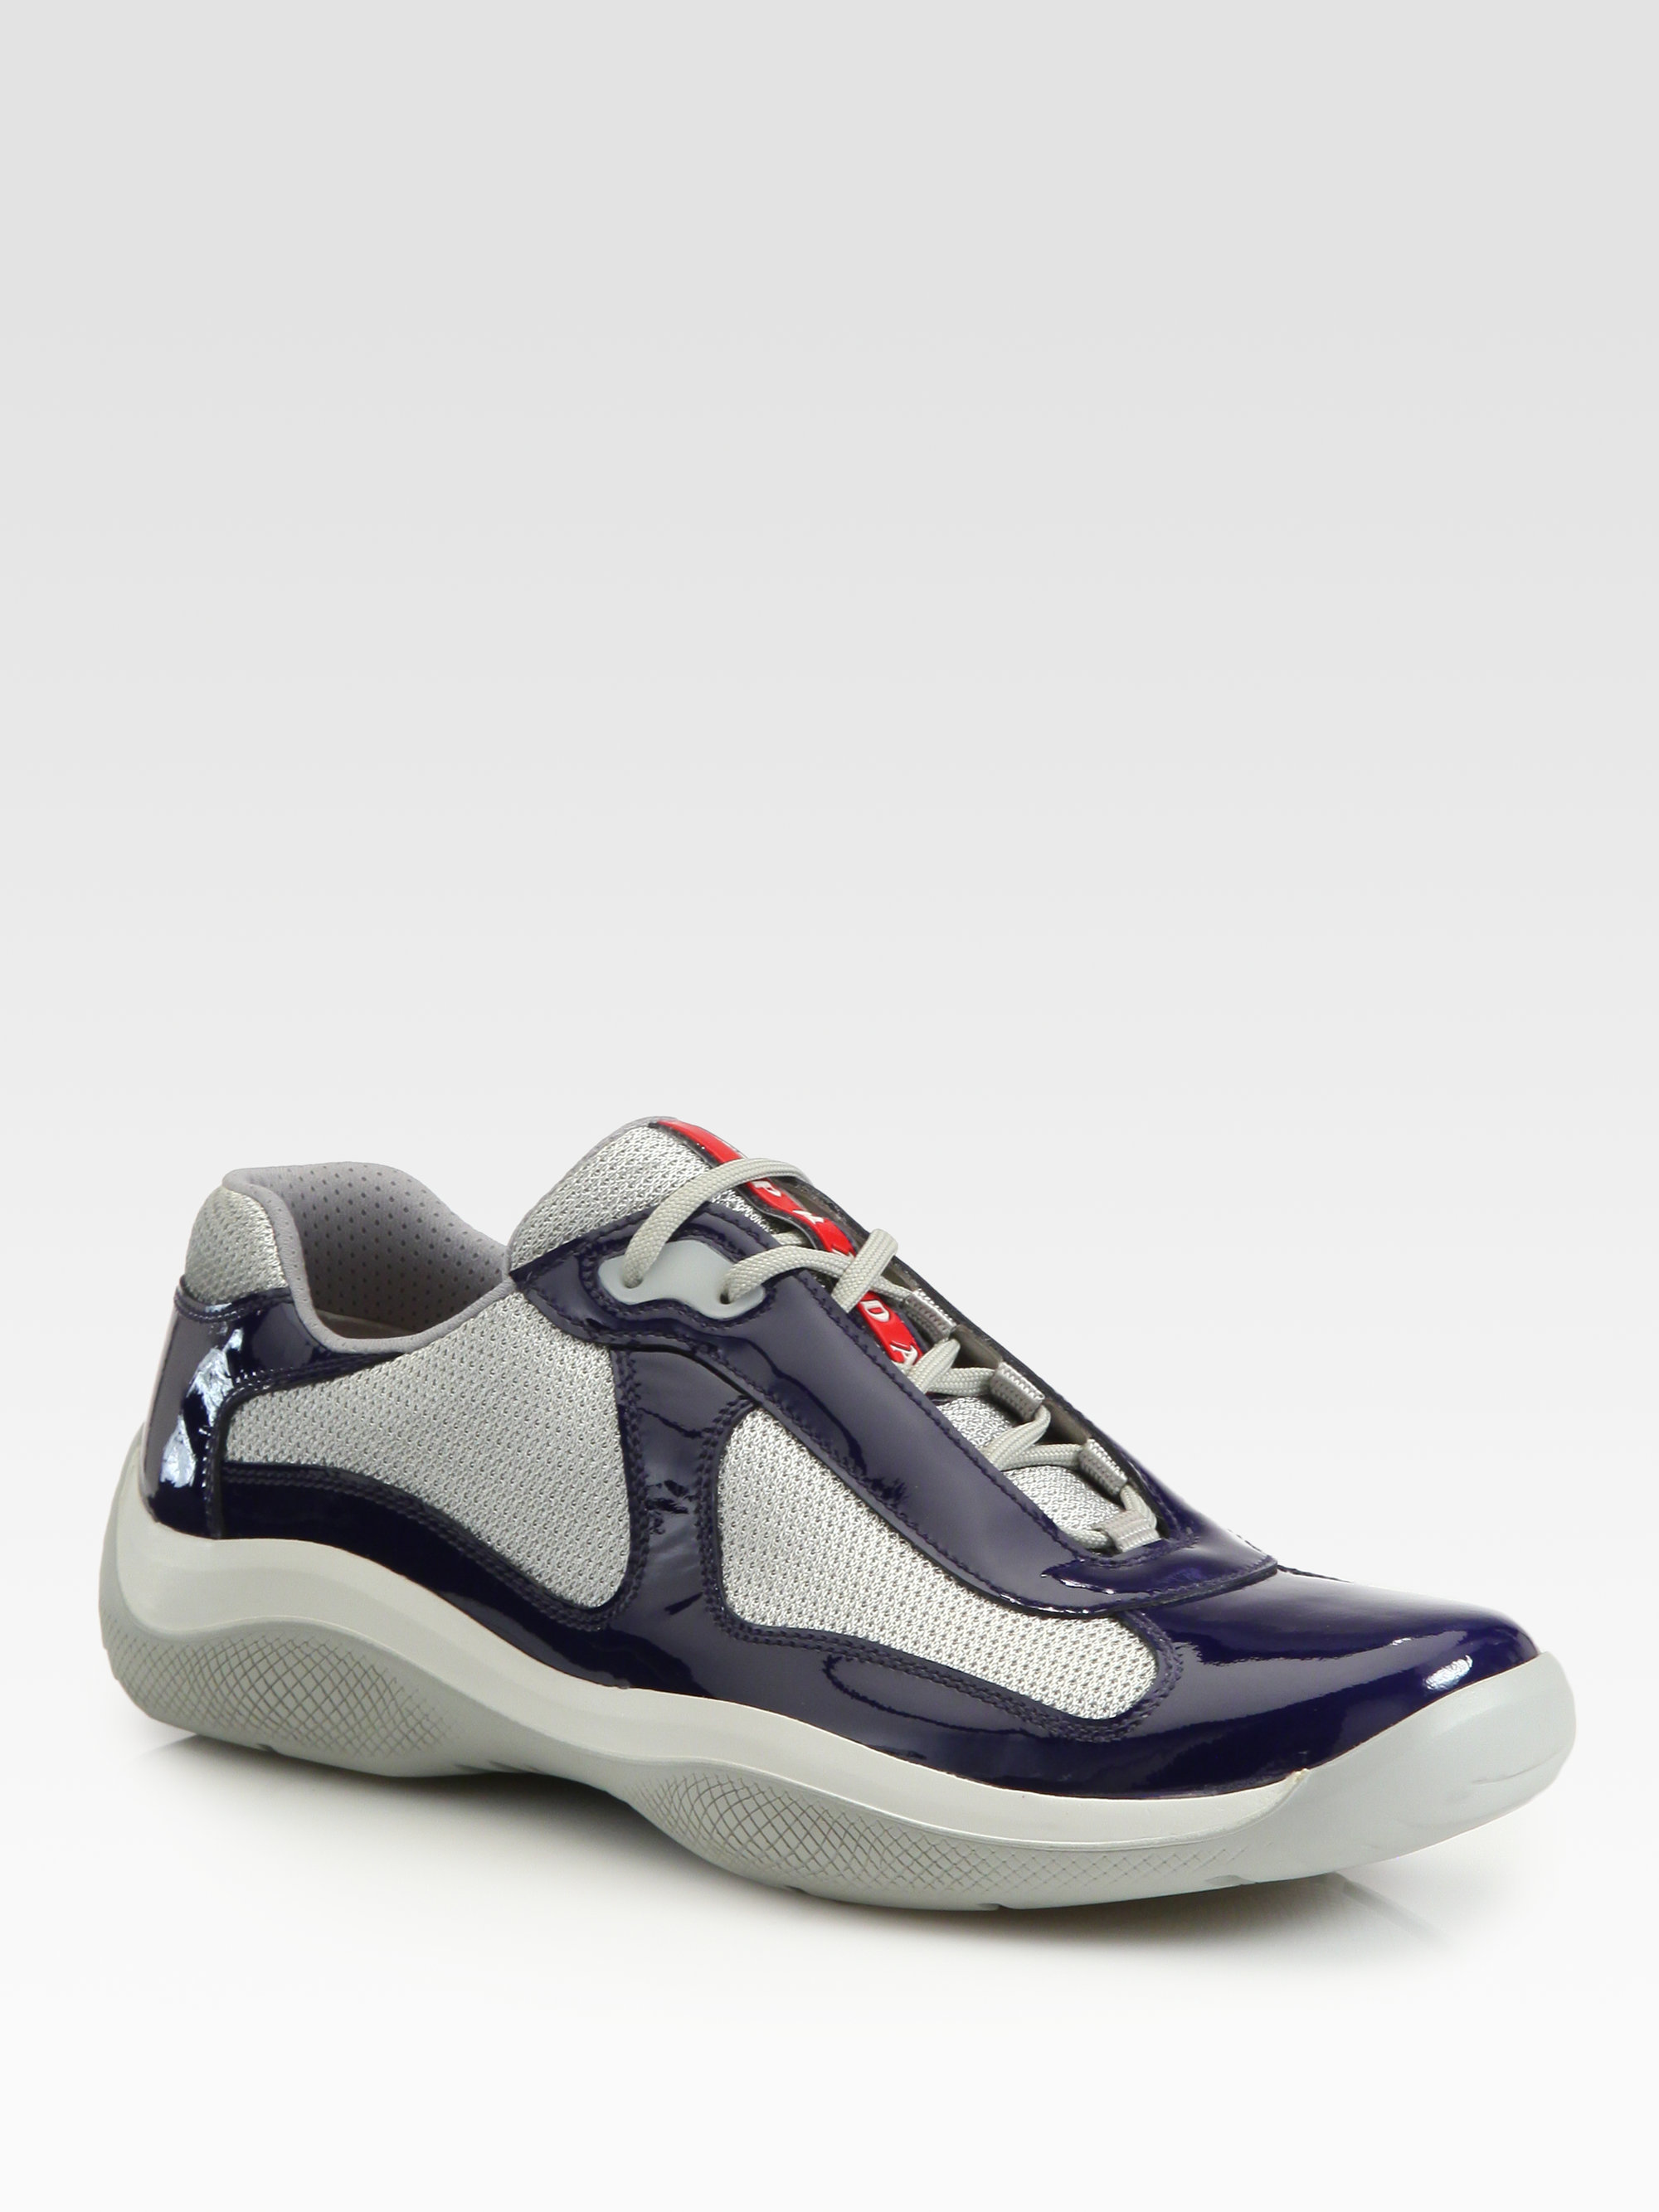 blue and black prada sneakers